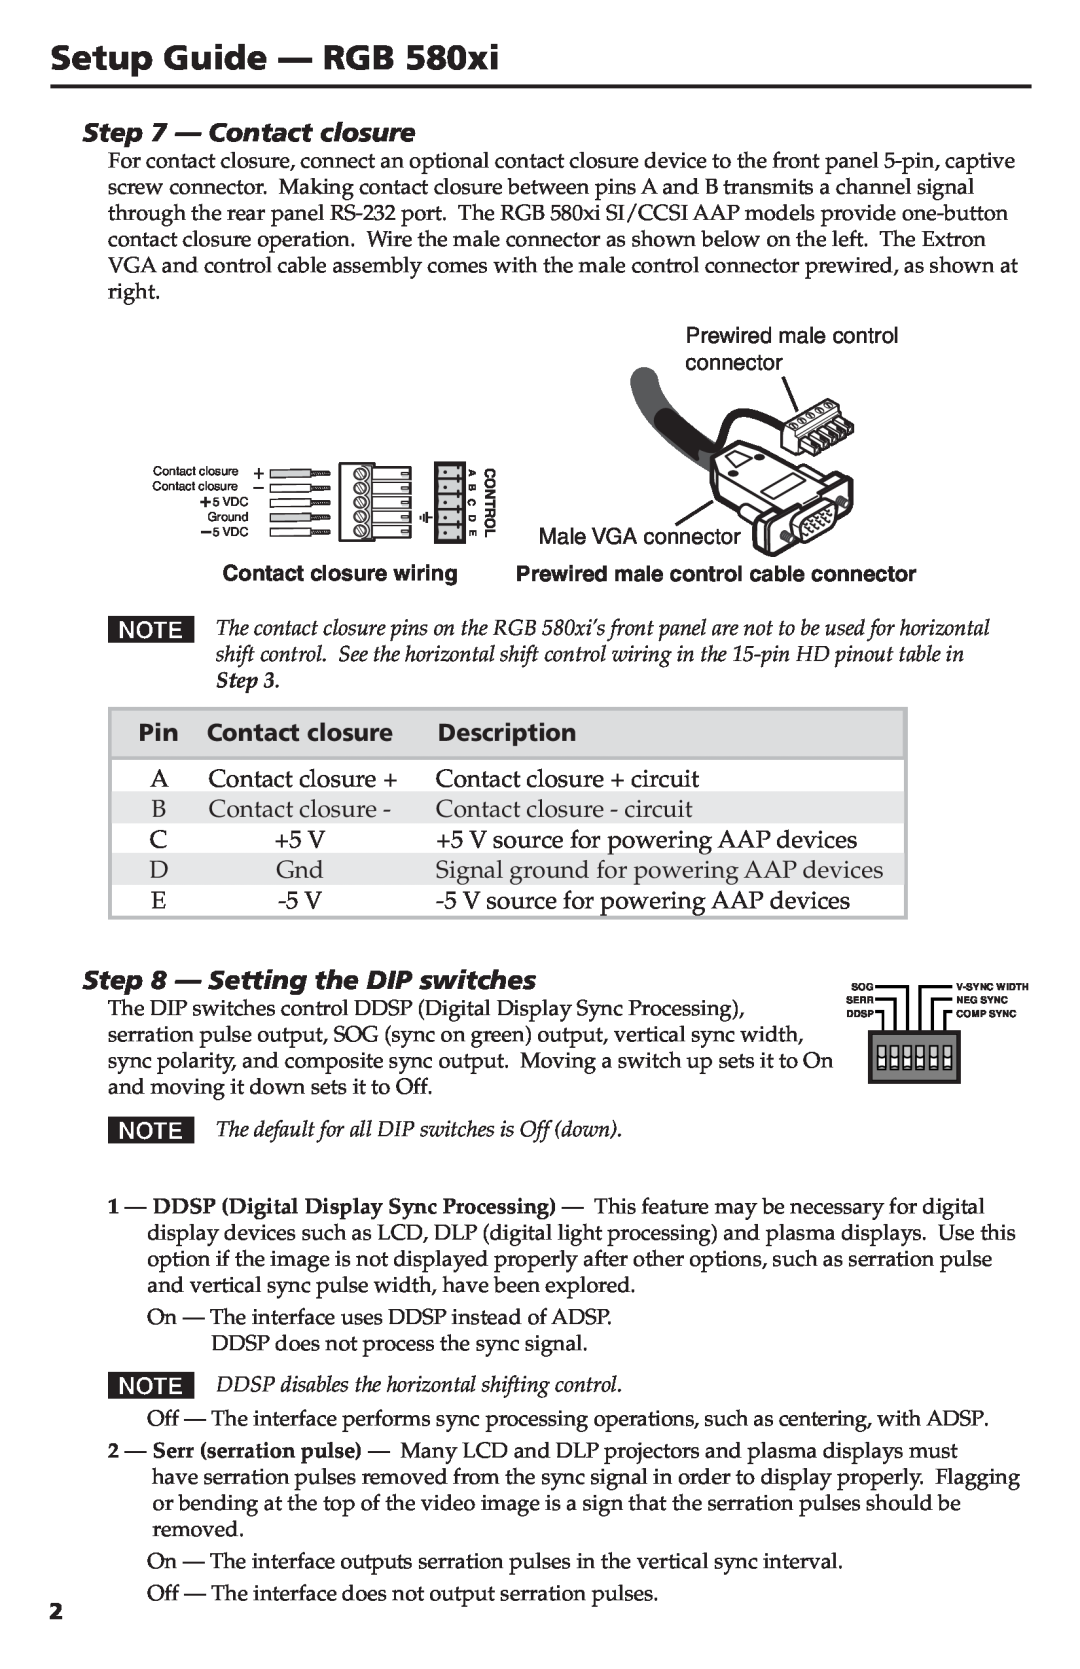 Extron electronic RGB 580XI setup guide Setup Guide -­RGB, Contact closure, Setting the DIP switches, Description 